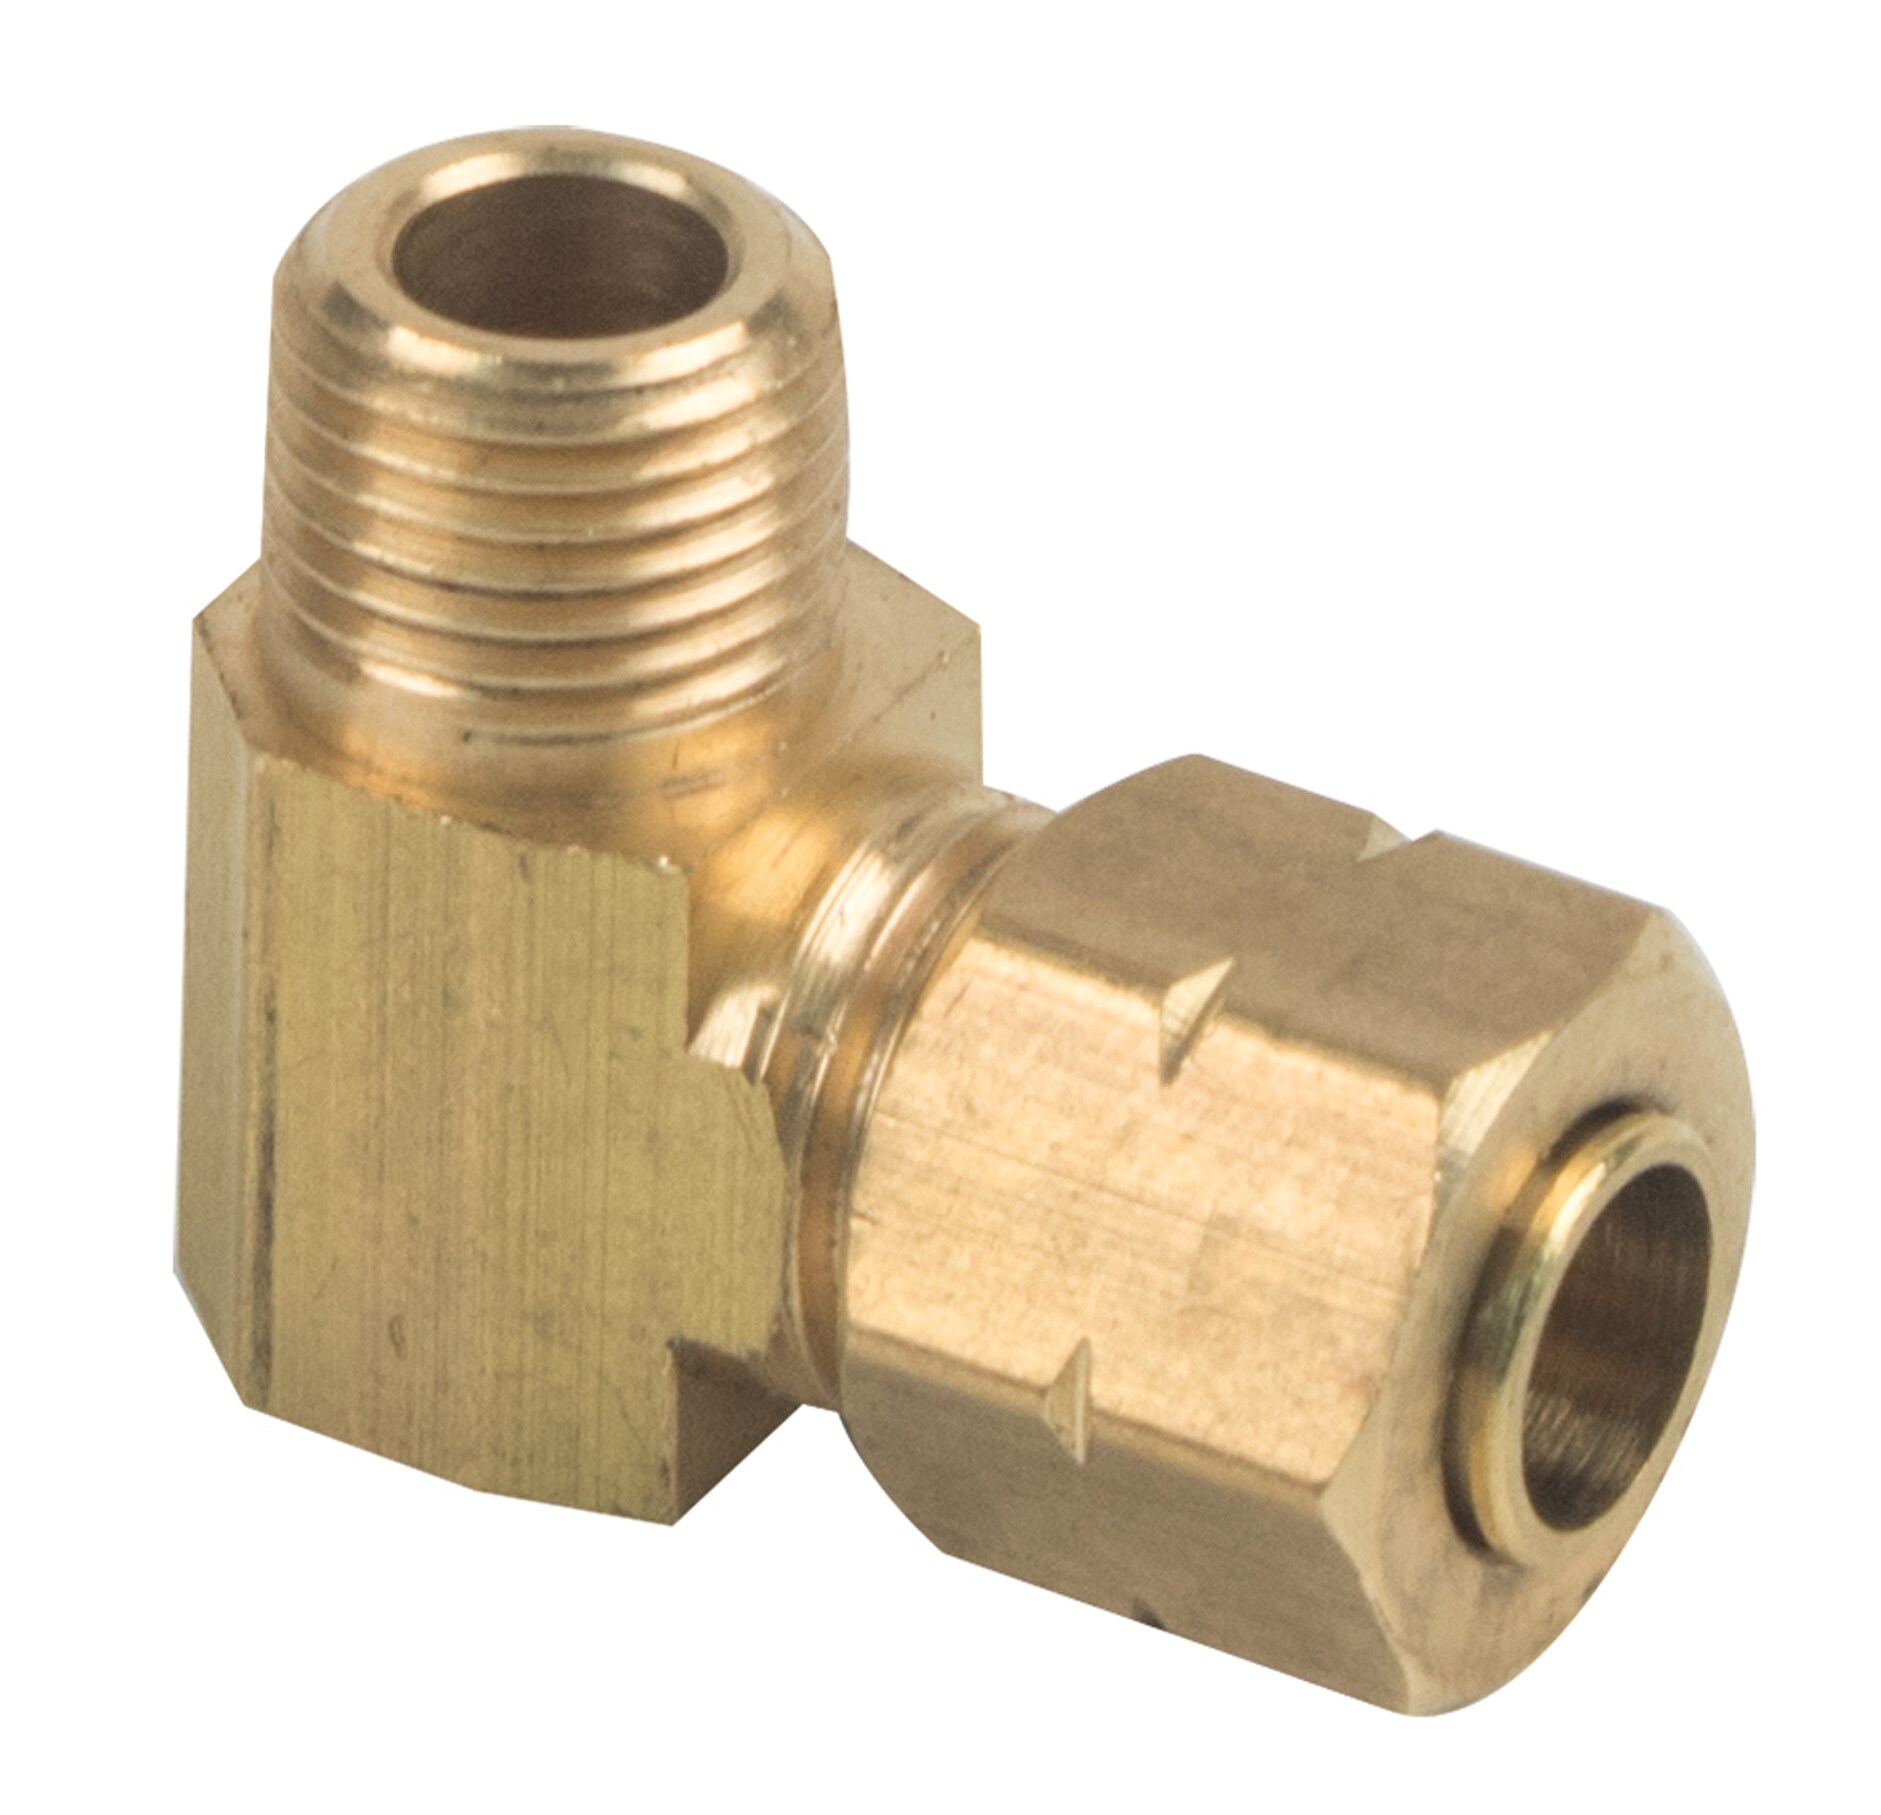 Brass T Compression Fitting Internal/External Thread Distributor Air Oil Water 